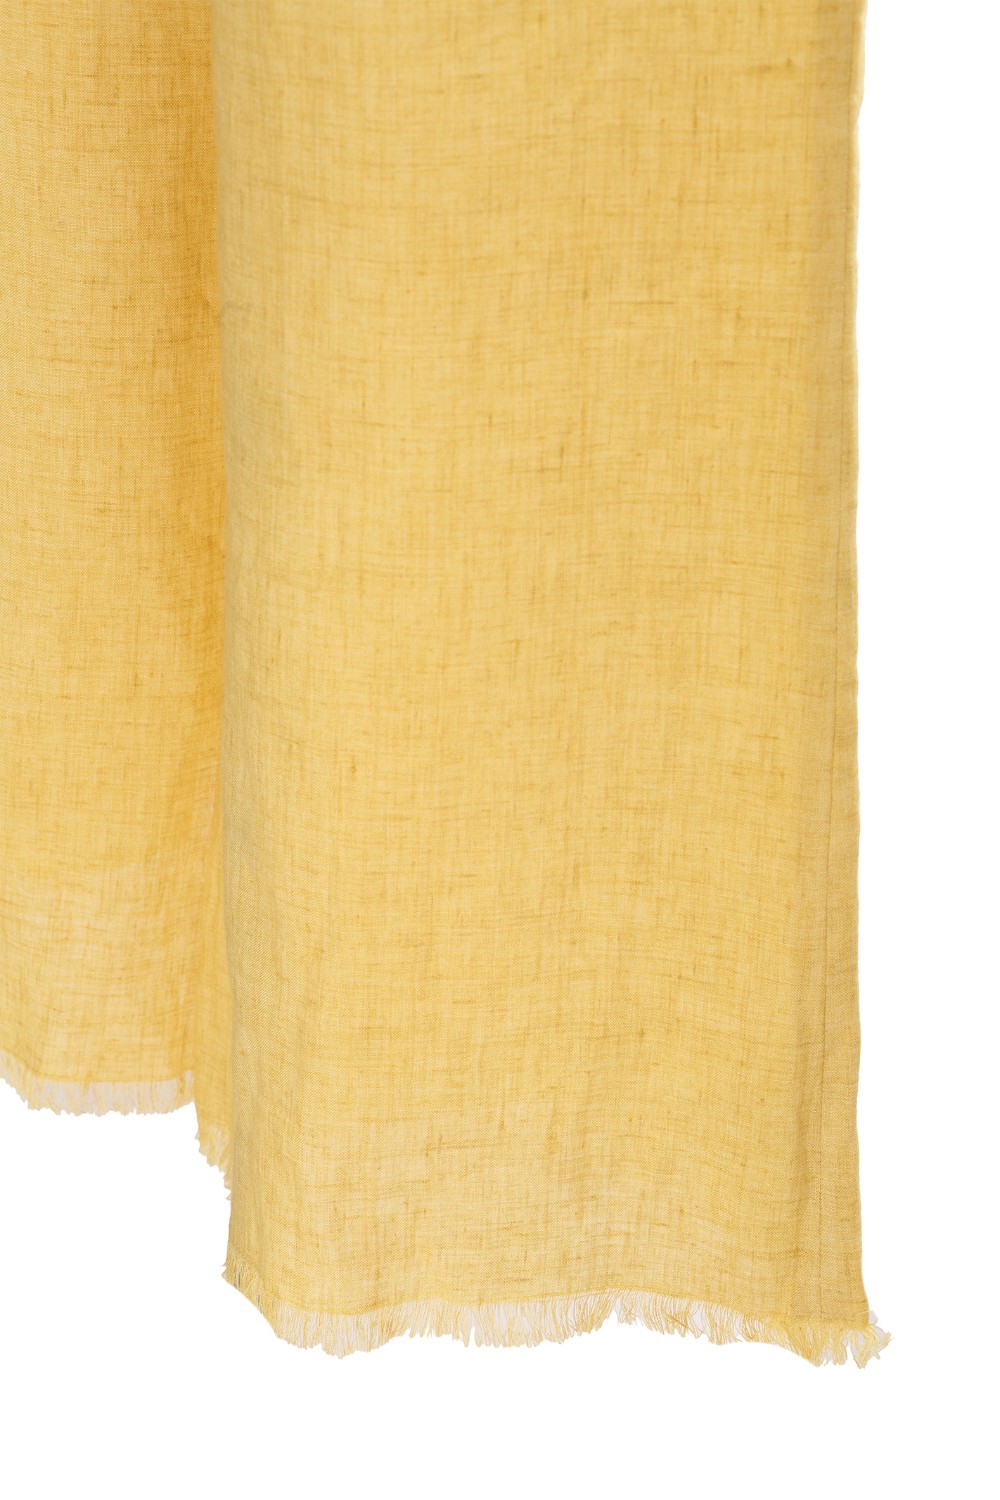 shop FABIANA FILIPPI Saldi Pantalone: Fabiana Filippi pantalone giallo.
Vestibilità regular.
Coulisse in vita.
100 % lino.
Made in Italy. PAD270W793 A934-756 number 4159078